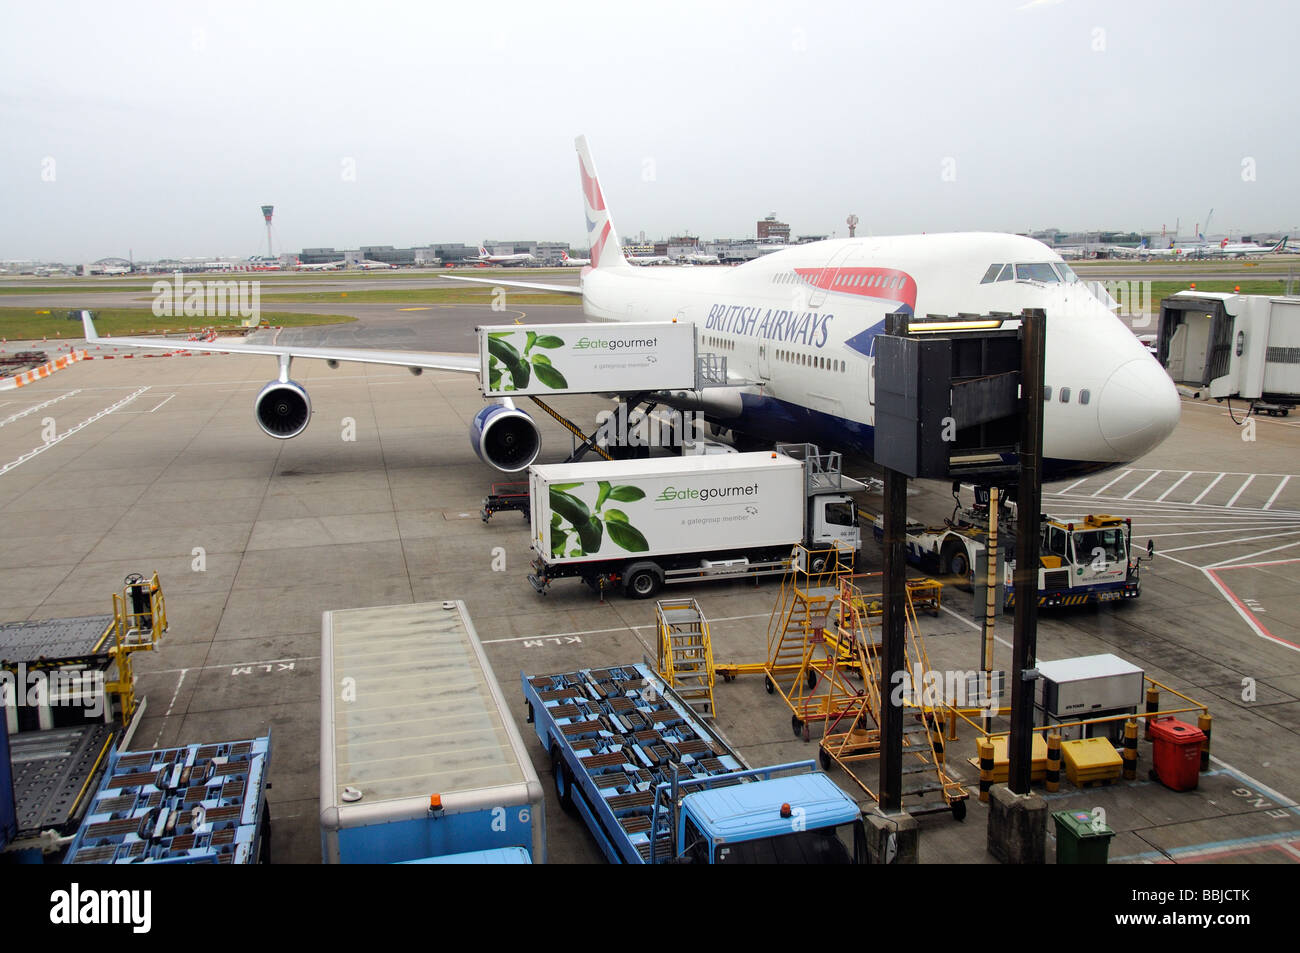 Gategourmet catering supplier trucks loading a BA 747 jet aircraft at London Heathrow airport Stock Photo